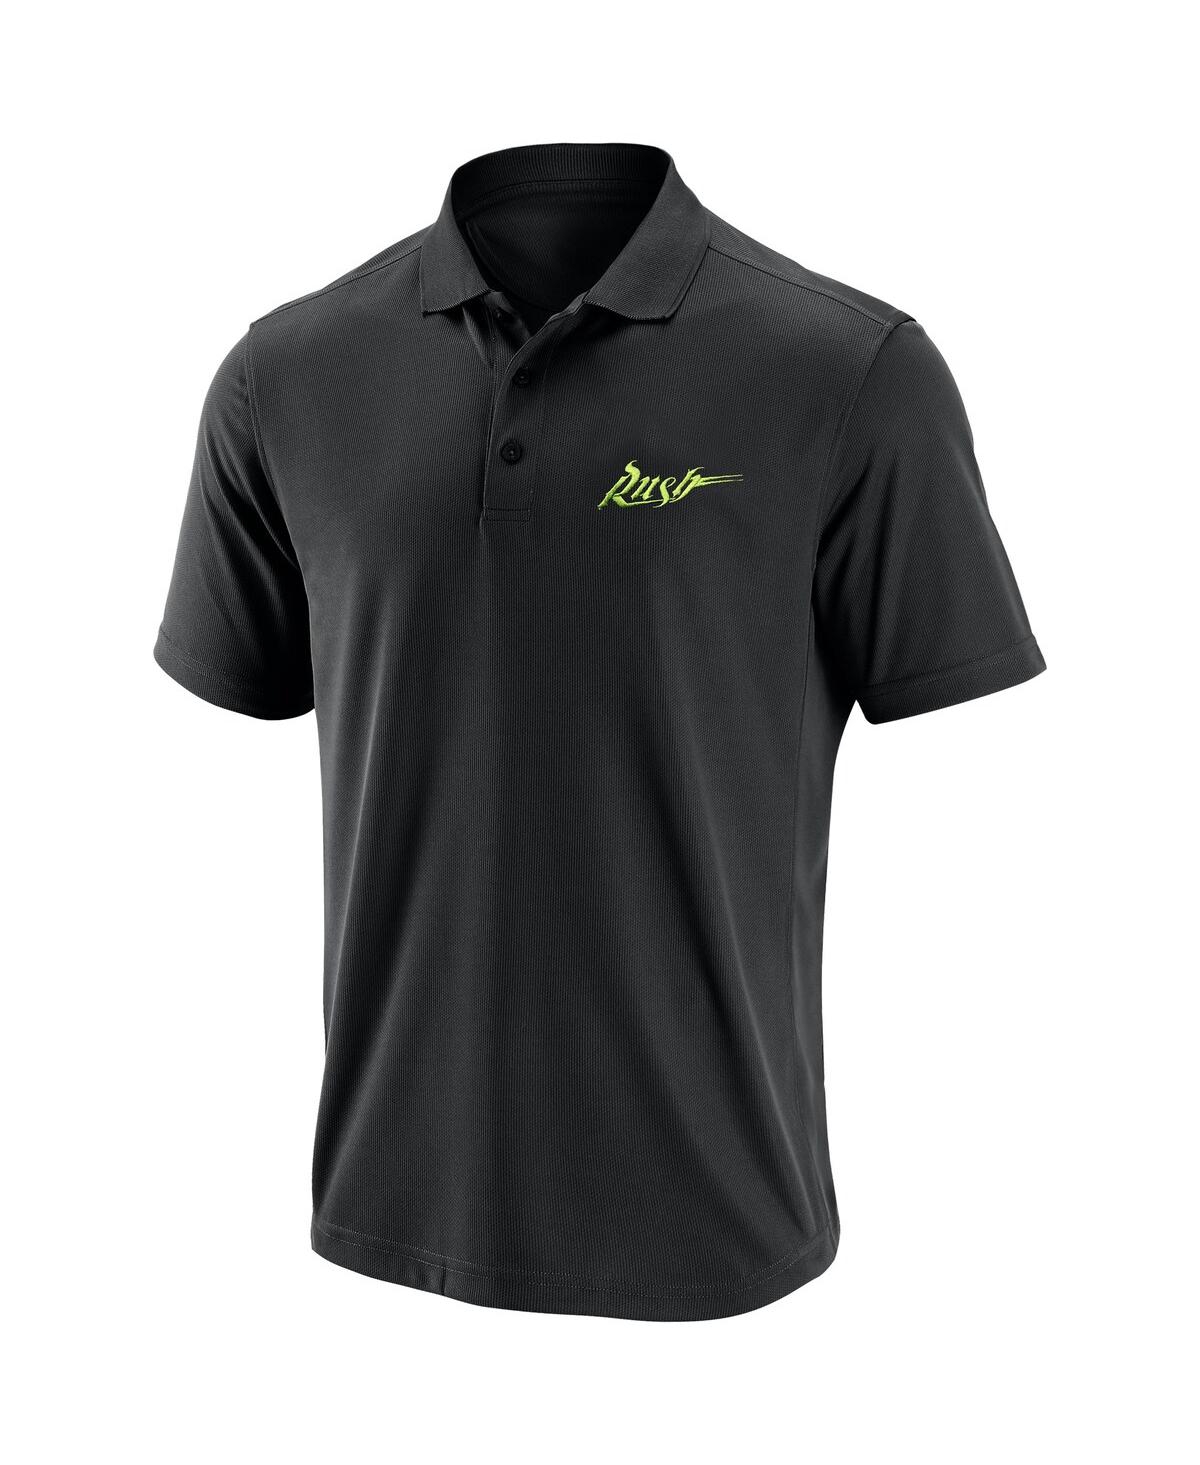 Shop Adpro Sports Men's Black Saskatchewan Rush Primary Logo Polo Shirt